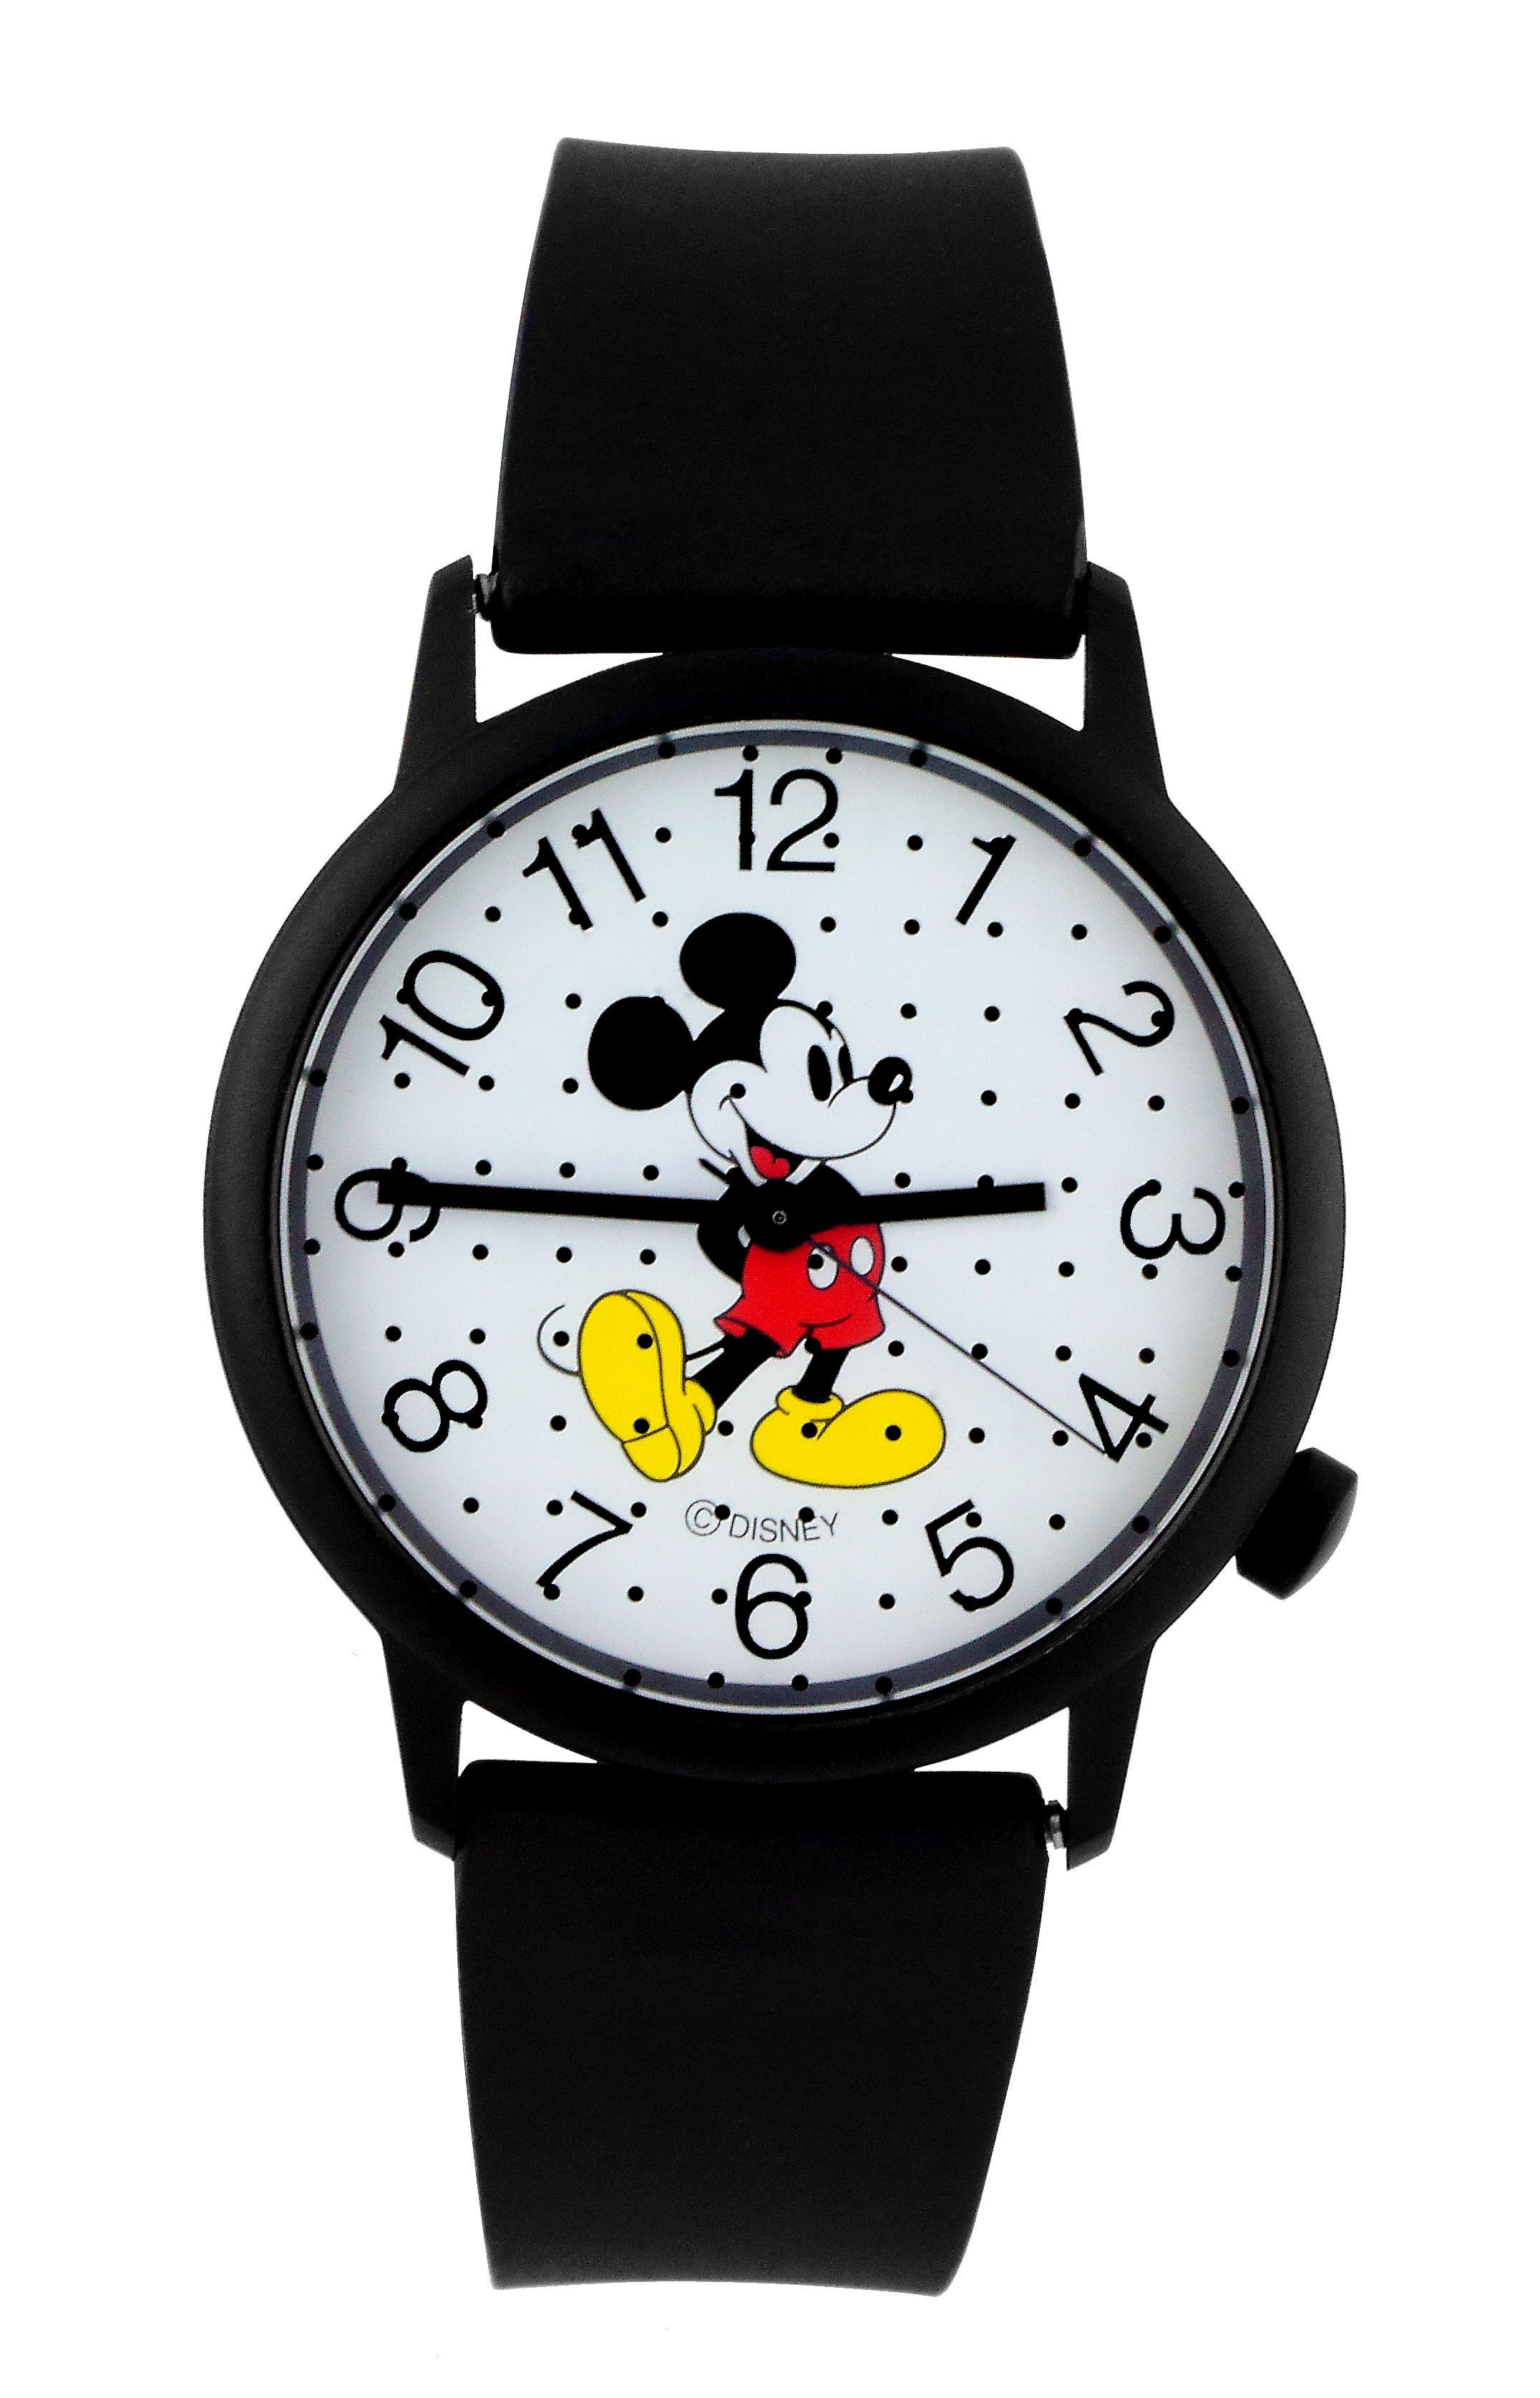 NEW Men's Disney Mickey Mouse Watch